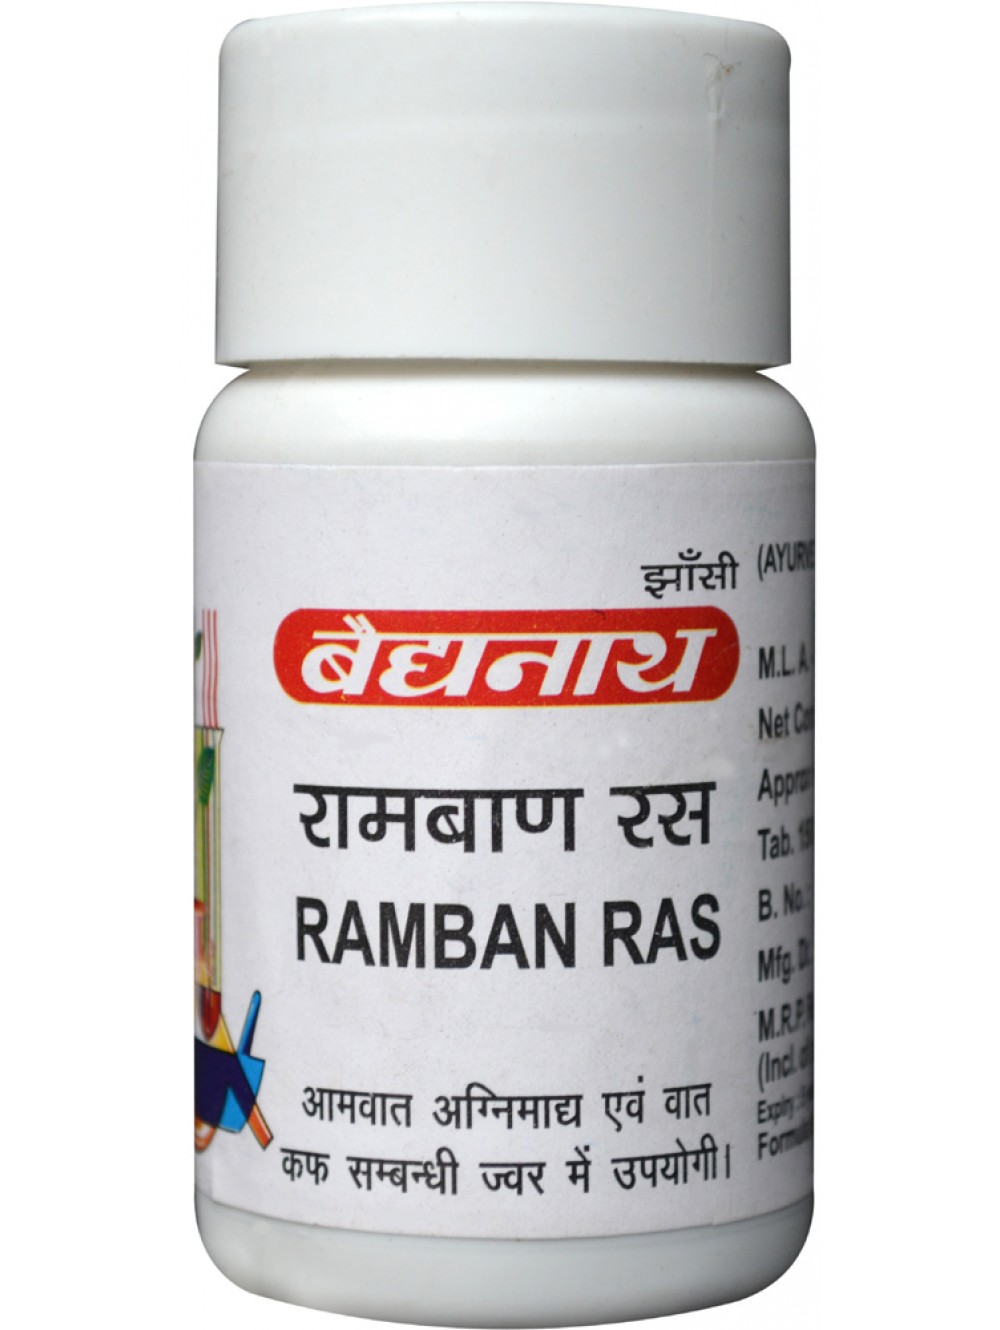 Buy Baidyanath Ramban Ras at Best Price Online